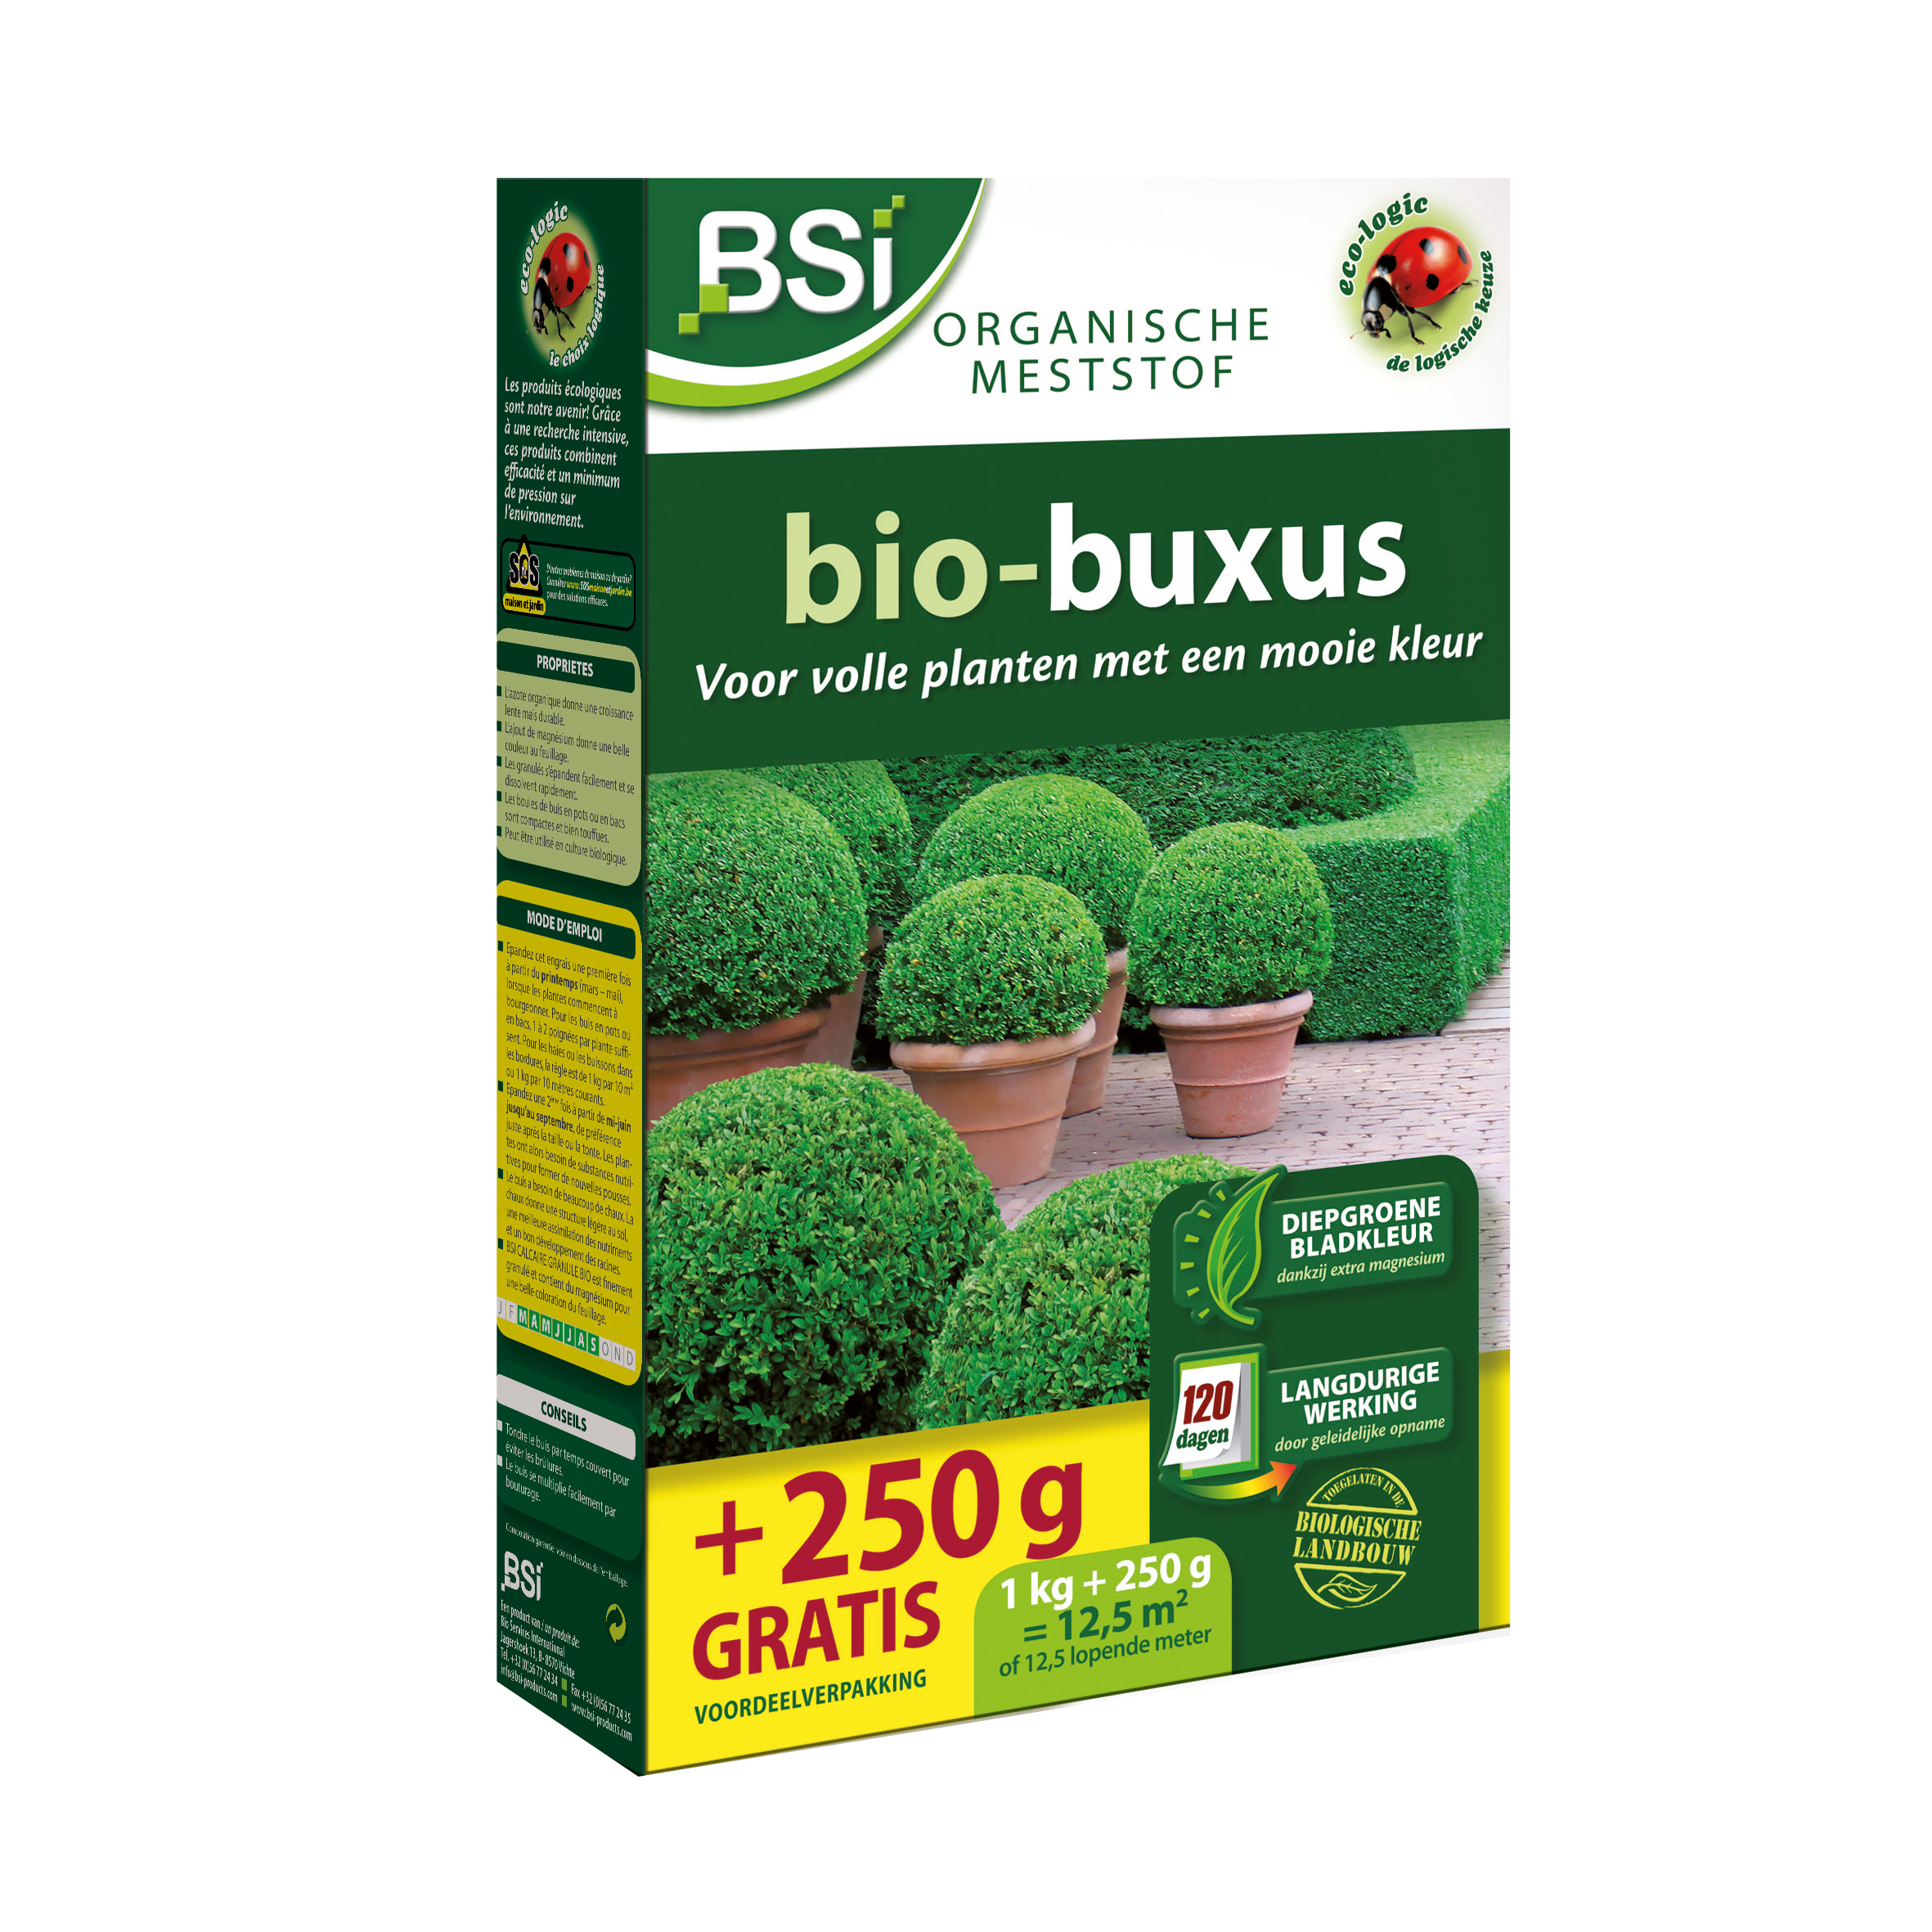 Bio buxus meststof 1,25 kg image